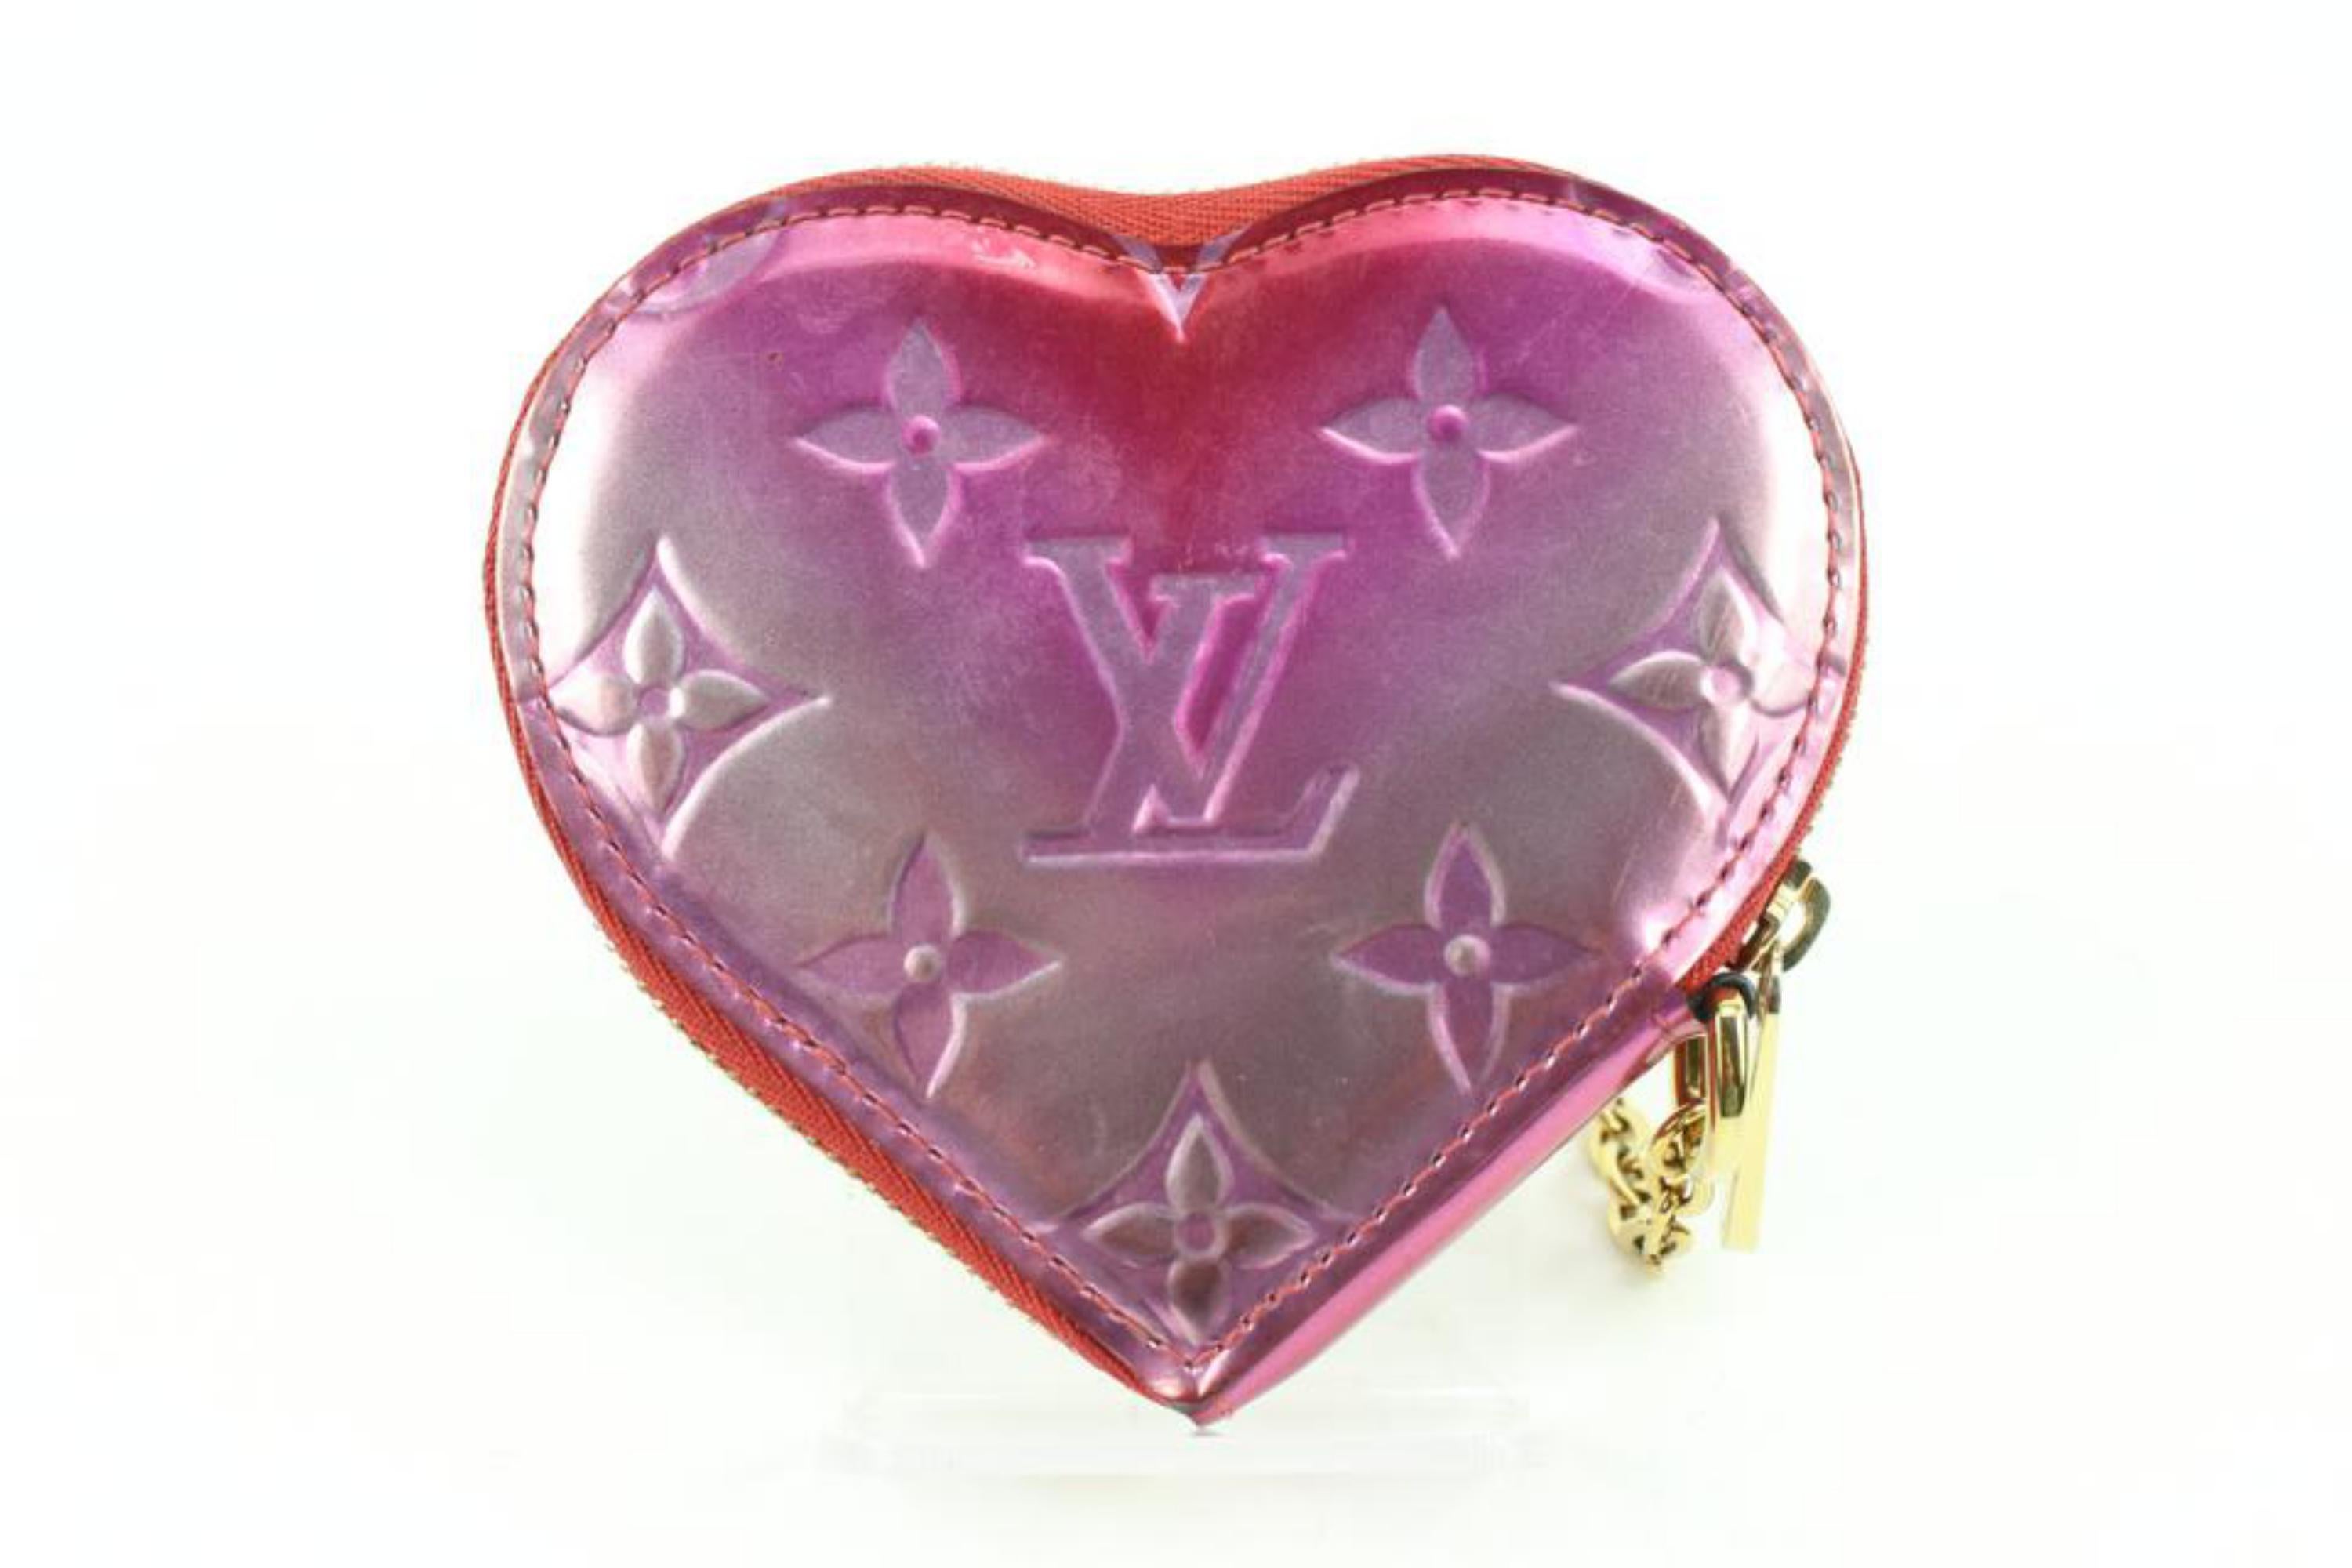 Louis Vuitton Limited Edition Vernis Monogram Degrade Heart Coin Purse 90lv225s For Sale 4